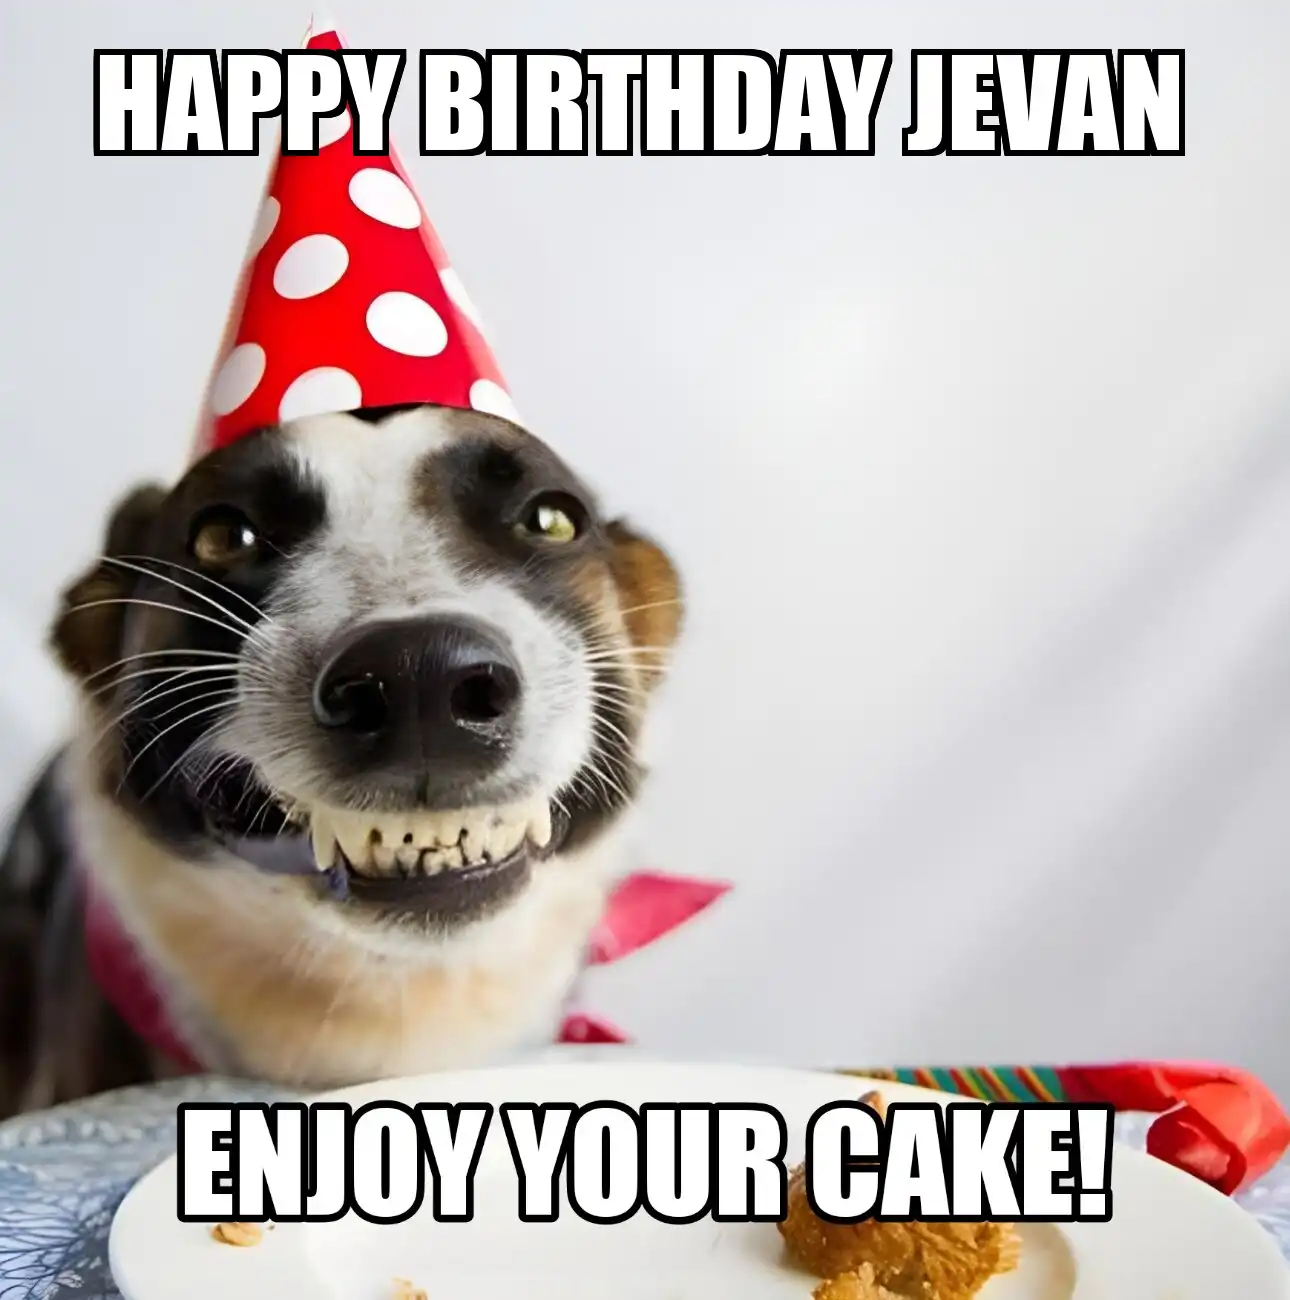 Happy Birthday Jevan Enjoy Your Cake Dog Meme